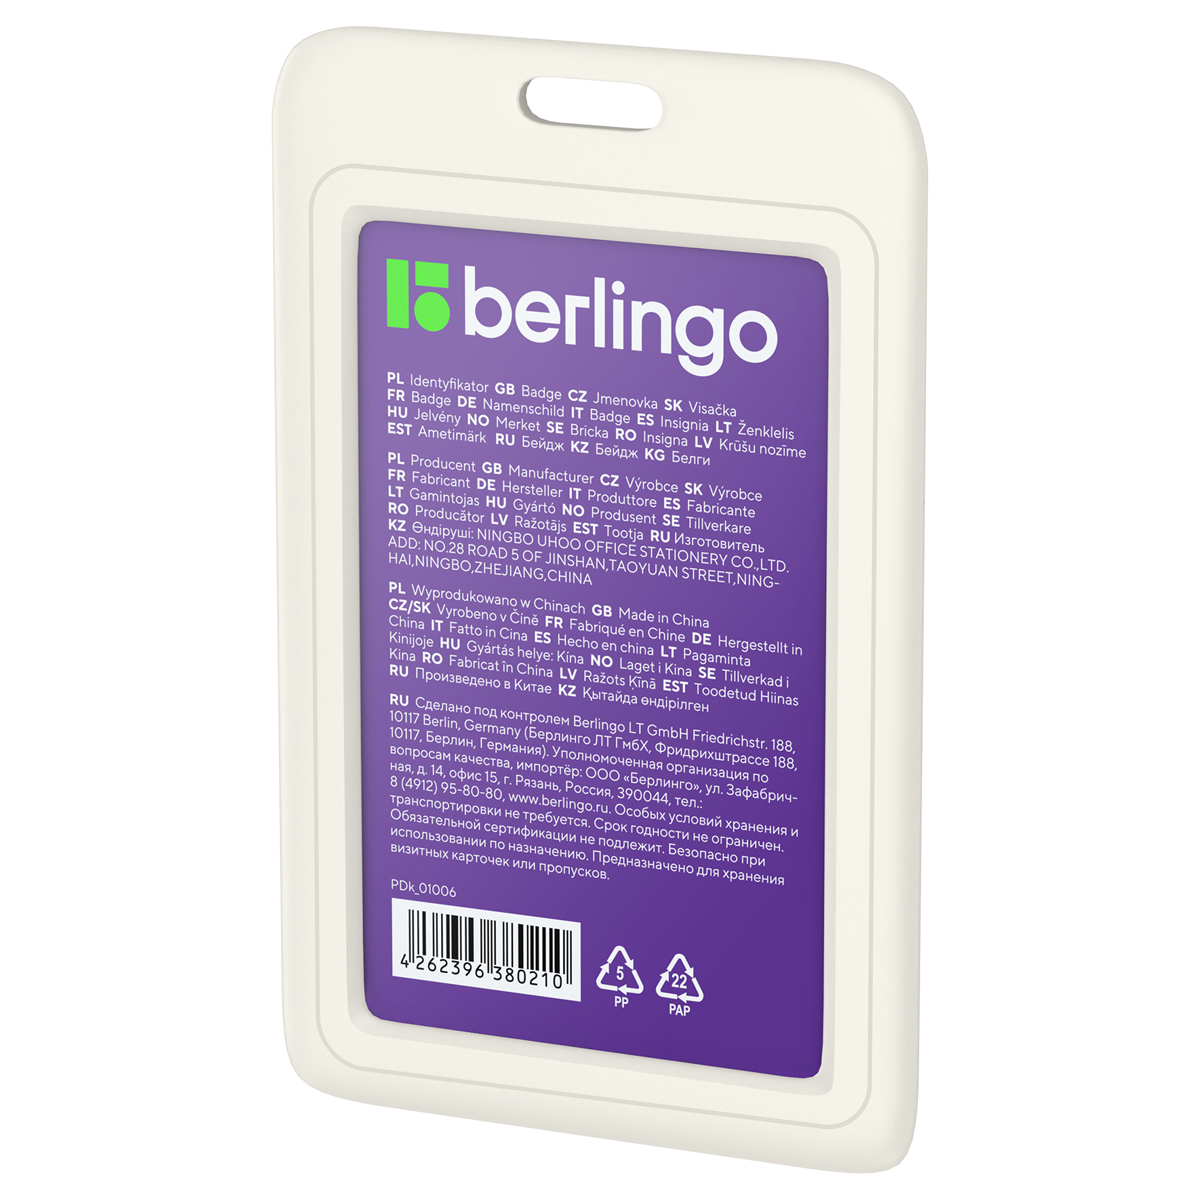   Berlingo "ID 200", 85*55,  